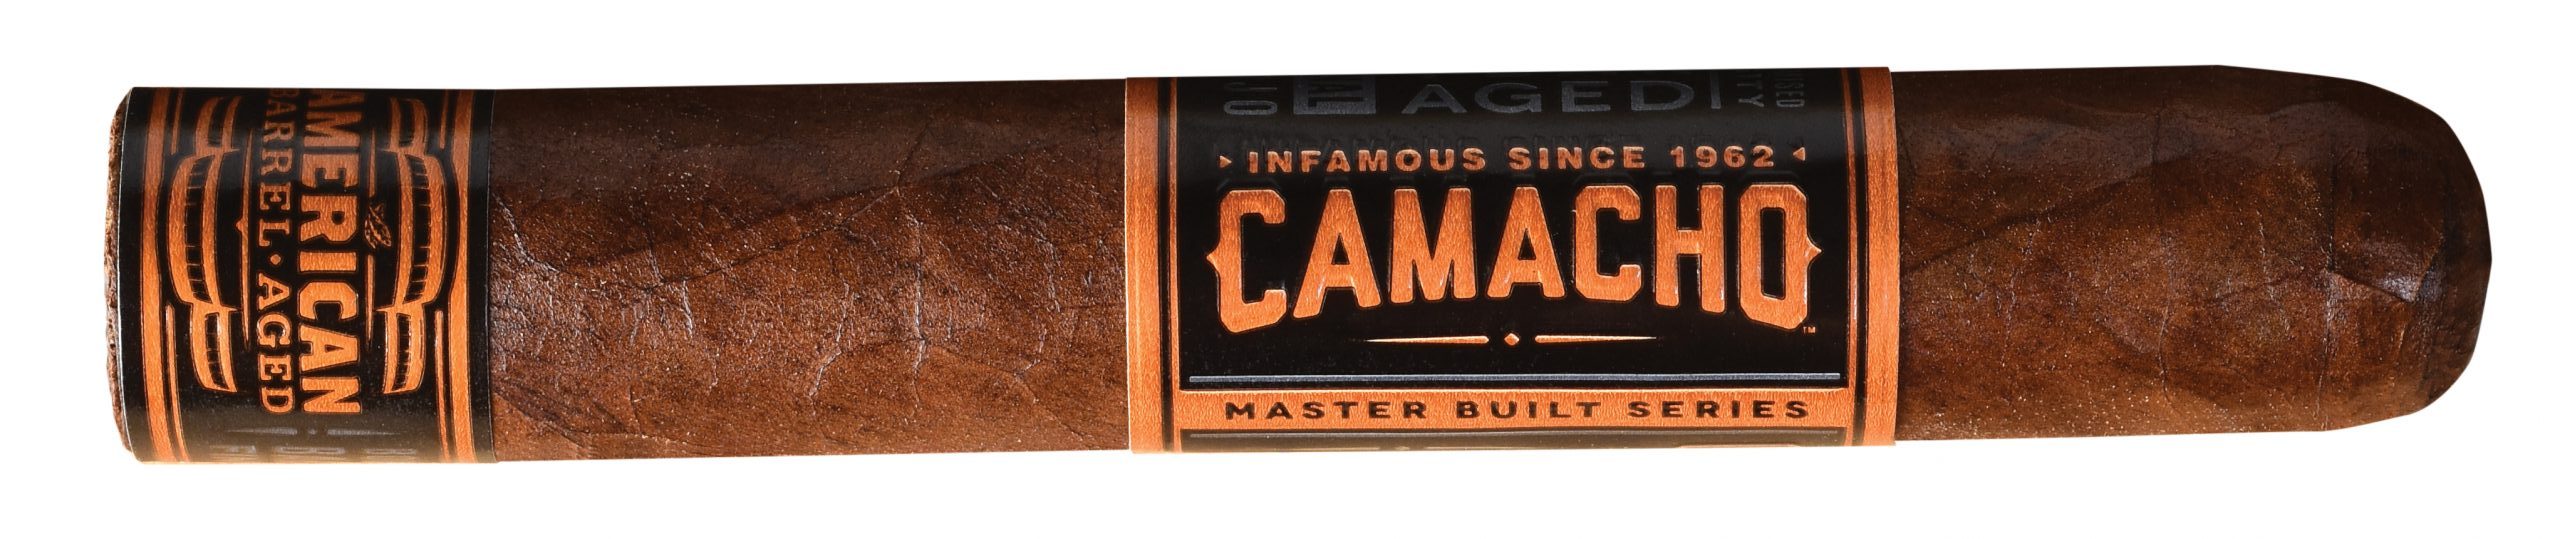 camacho american barrel aged robusto single cigar